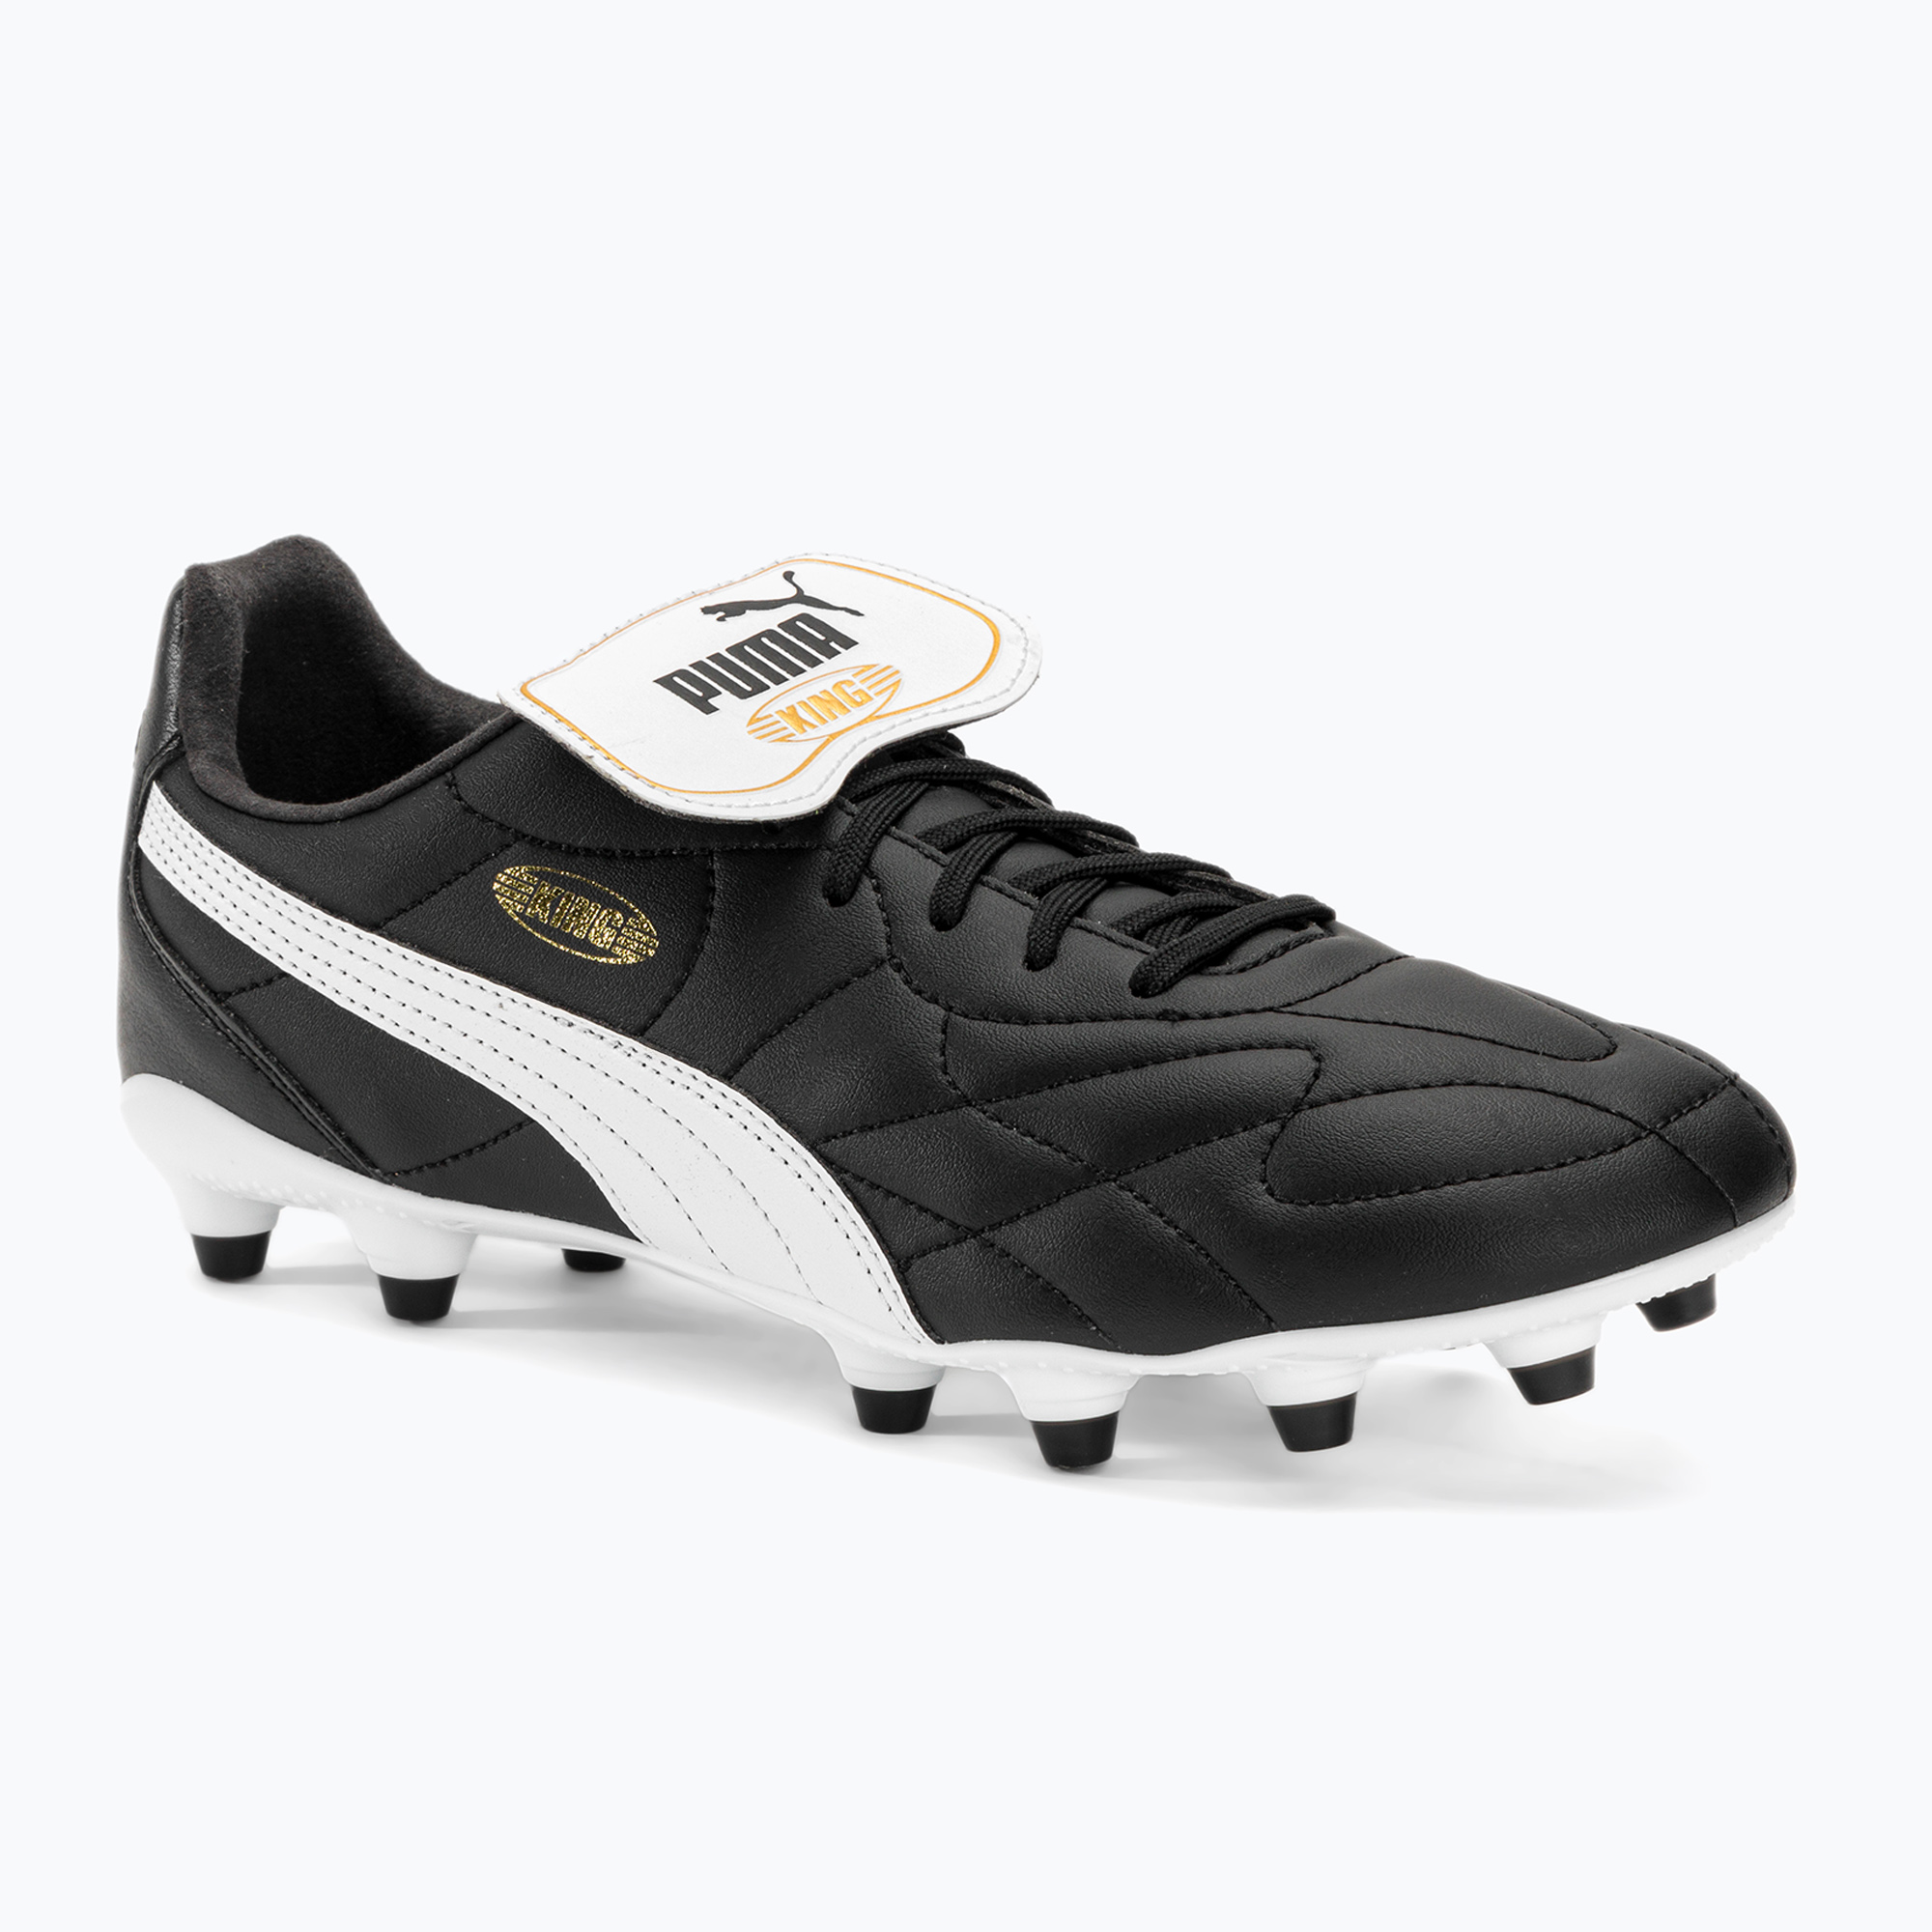 Мъжки футболни обувки PUMA King Top FG/AG puma black/puma white/puma gold